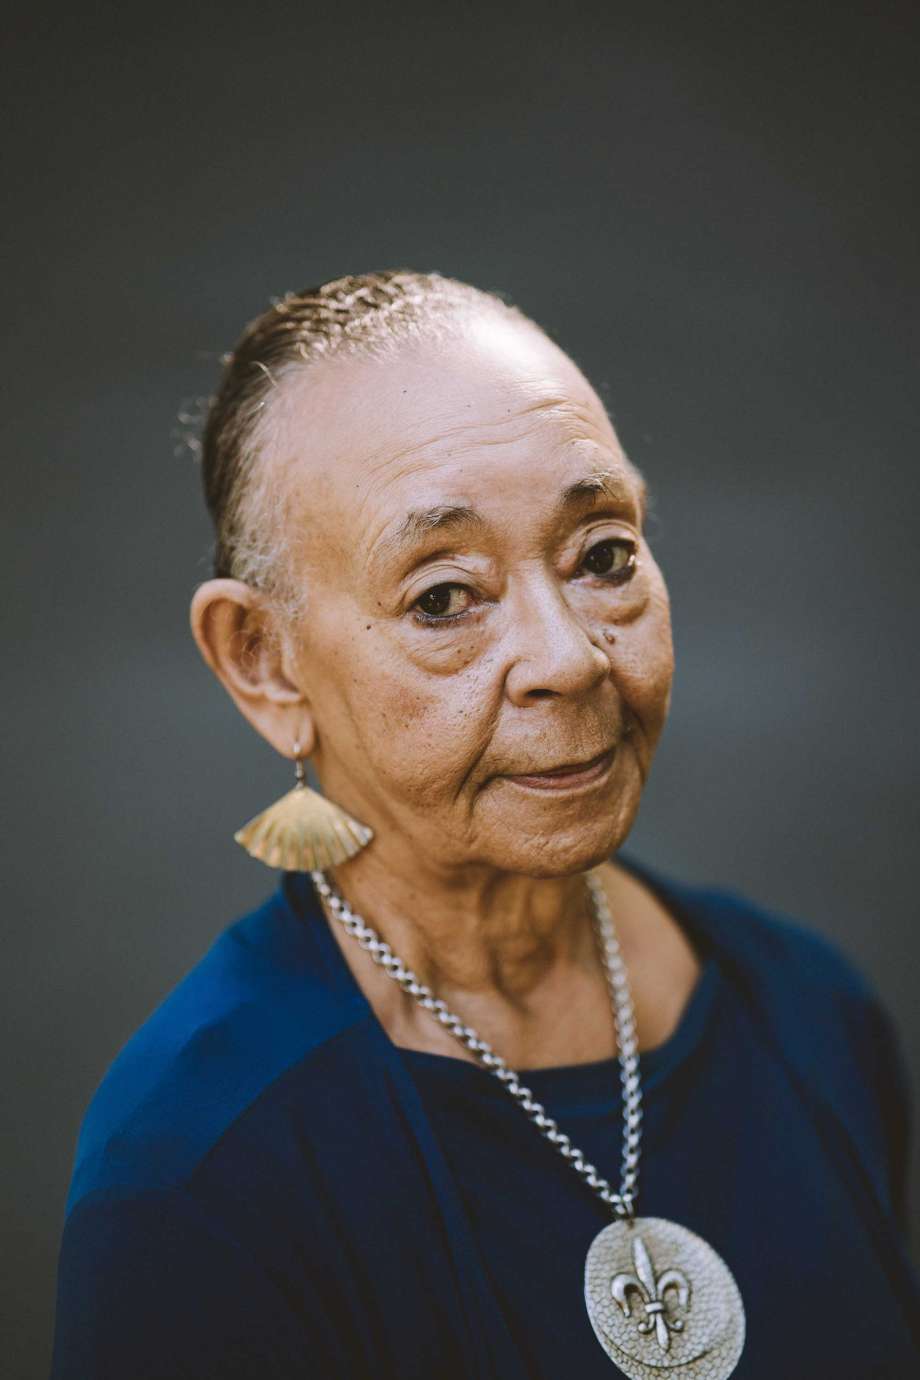 A portrait photograph of Joyce Morgan